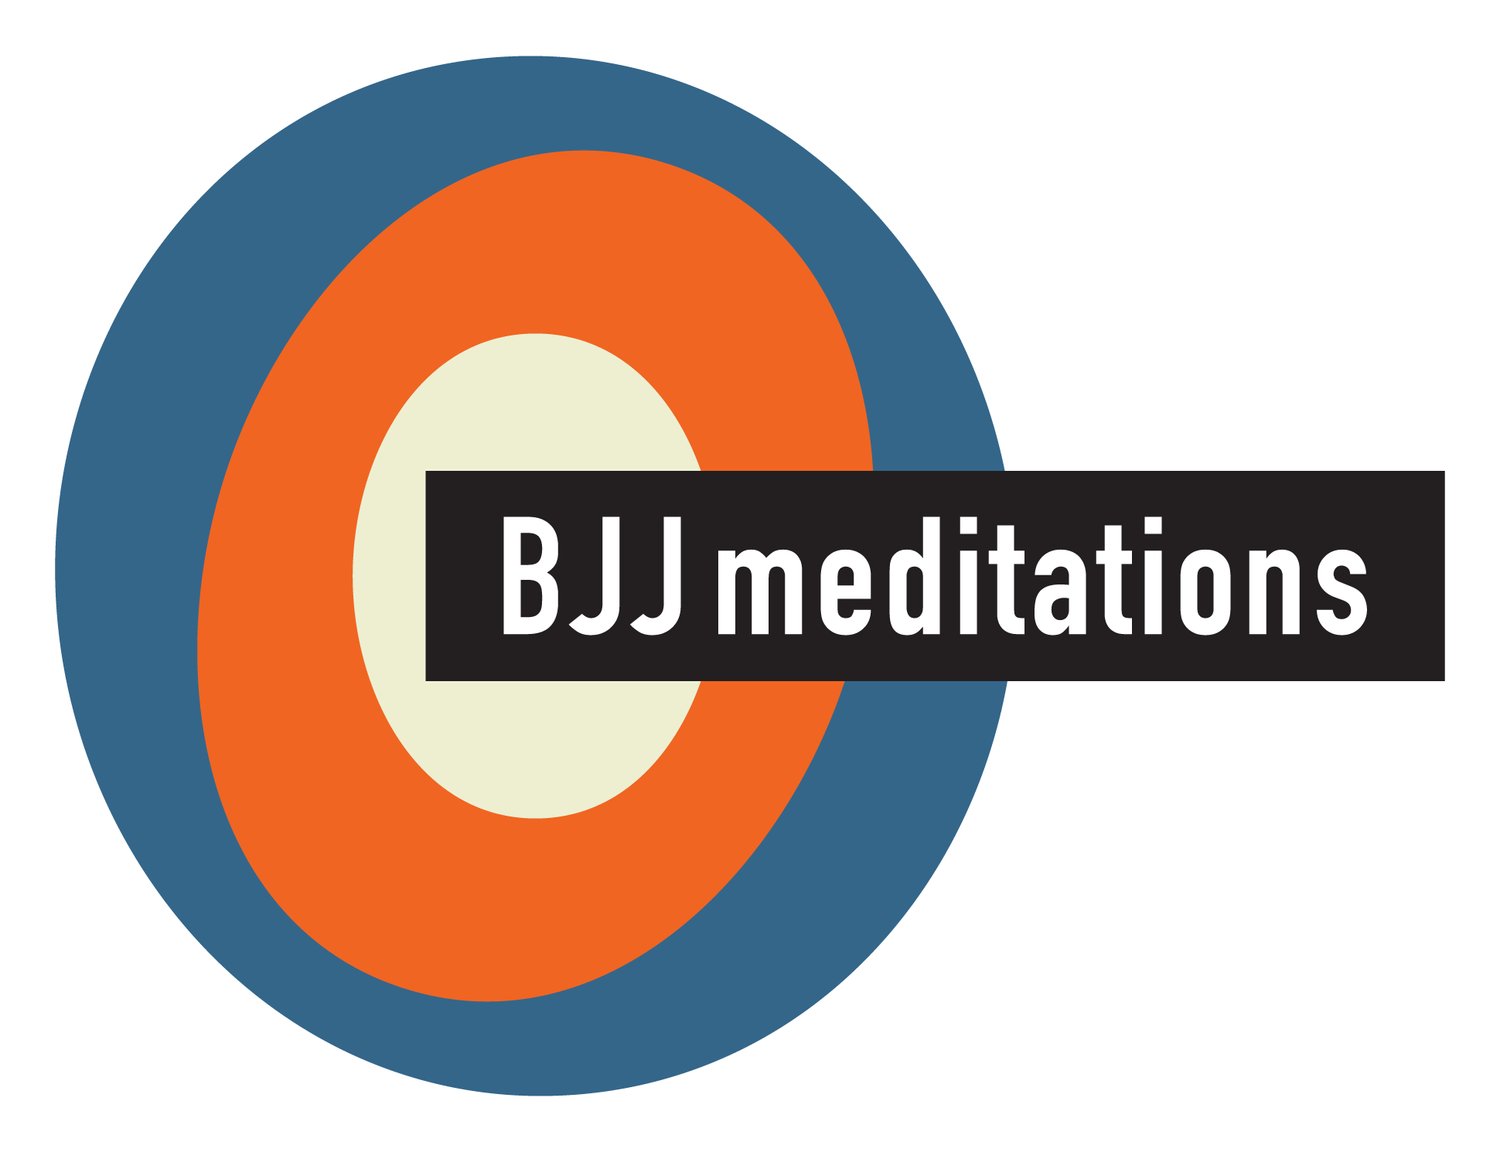 BJJ Meditations